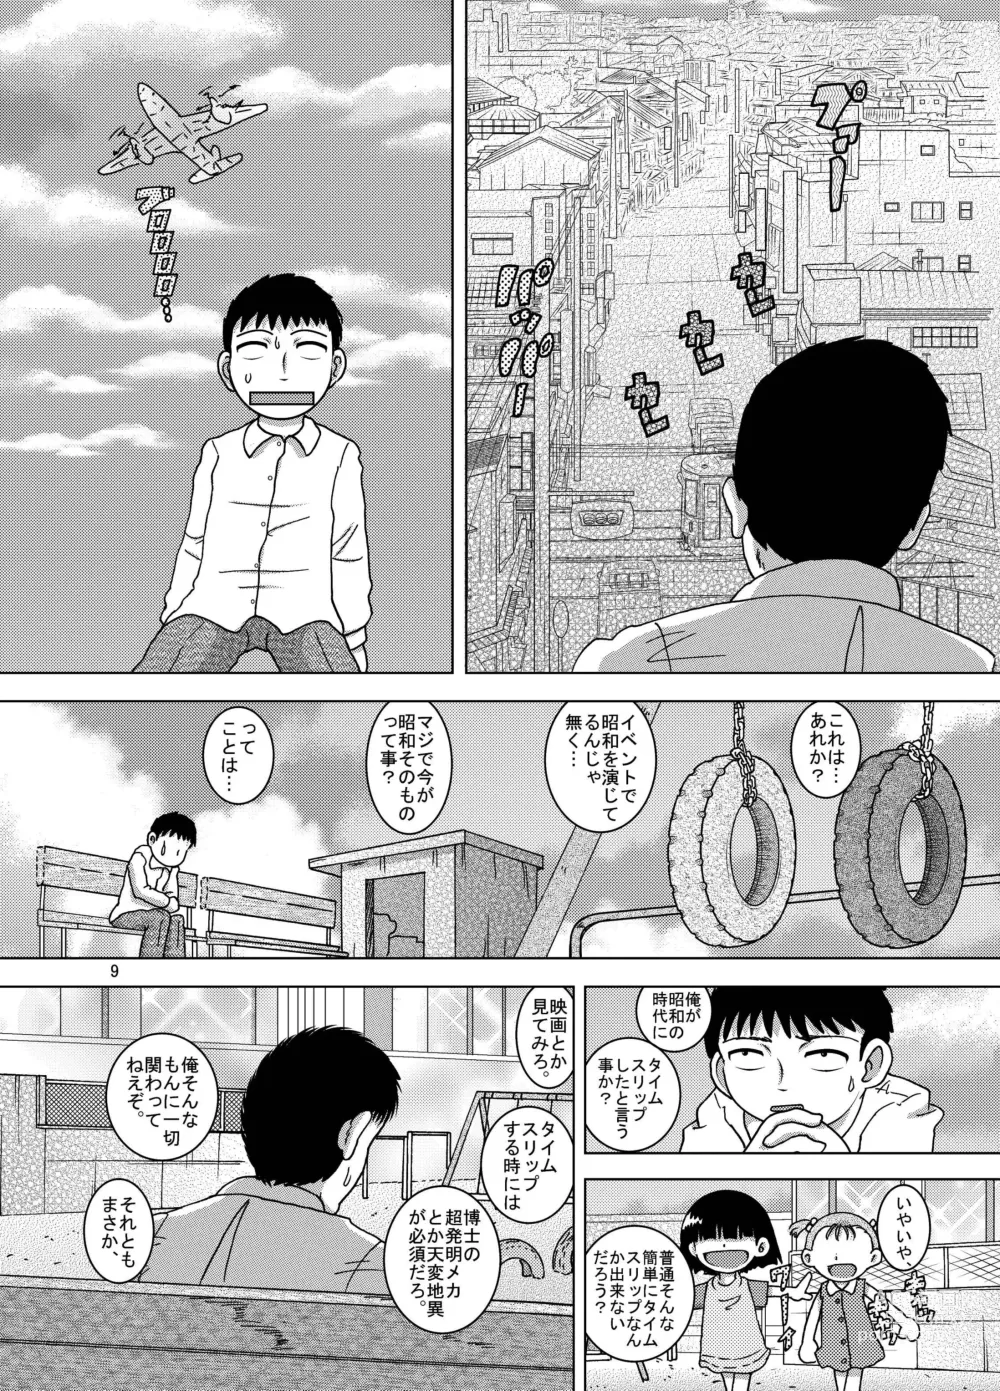 Page 9 of doujinshi Hoko Kankan